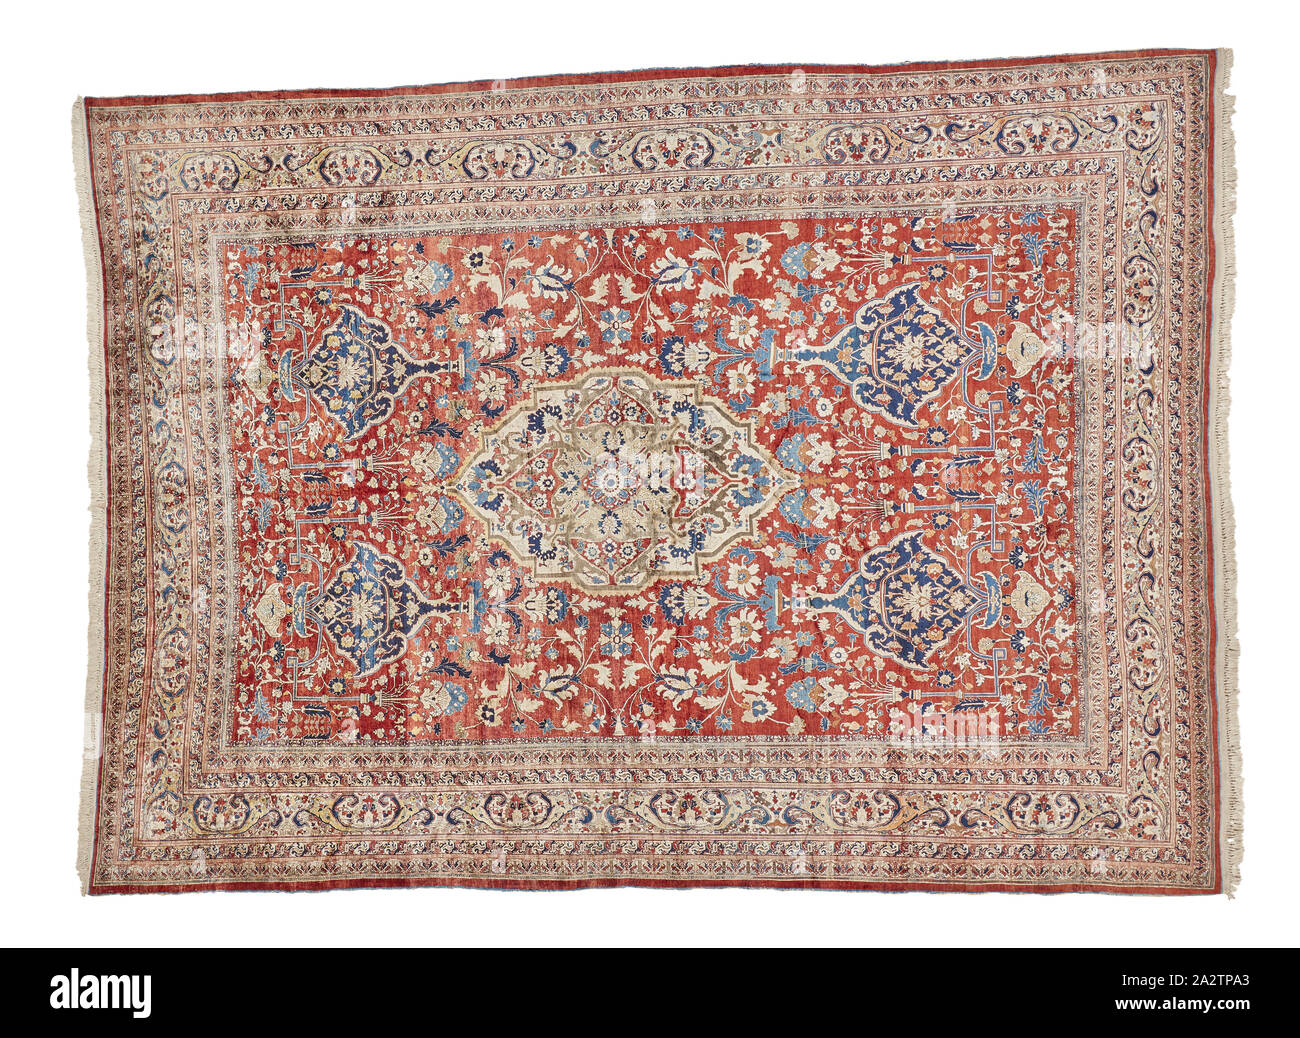 rug, 1880s-1890s, silk warp, silk pile 625 knots per inch, 120-3/4 x 166-1/2 in., Textile and Fashion Arts Stock Photo